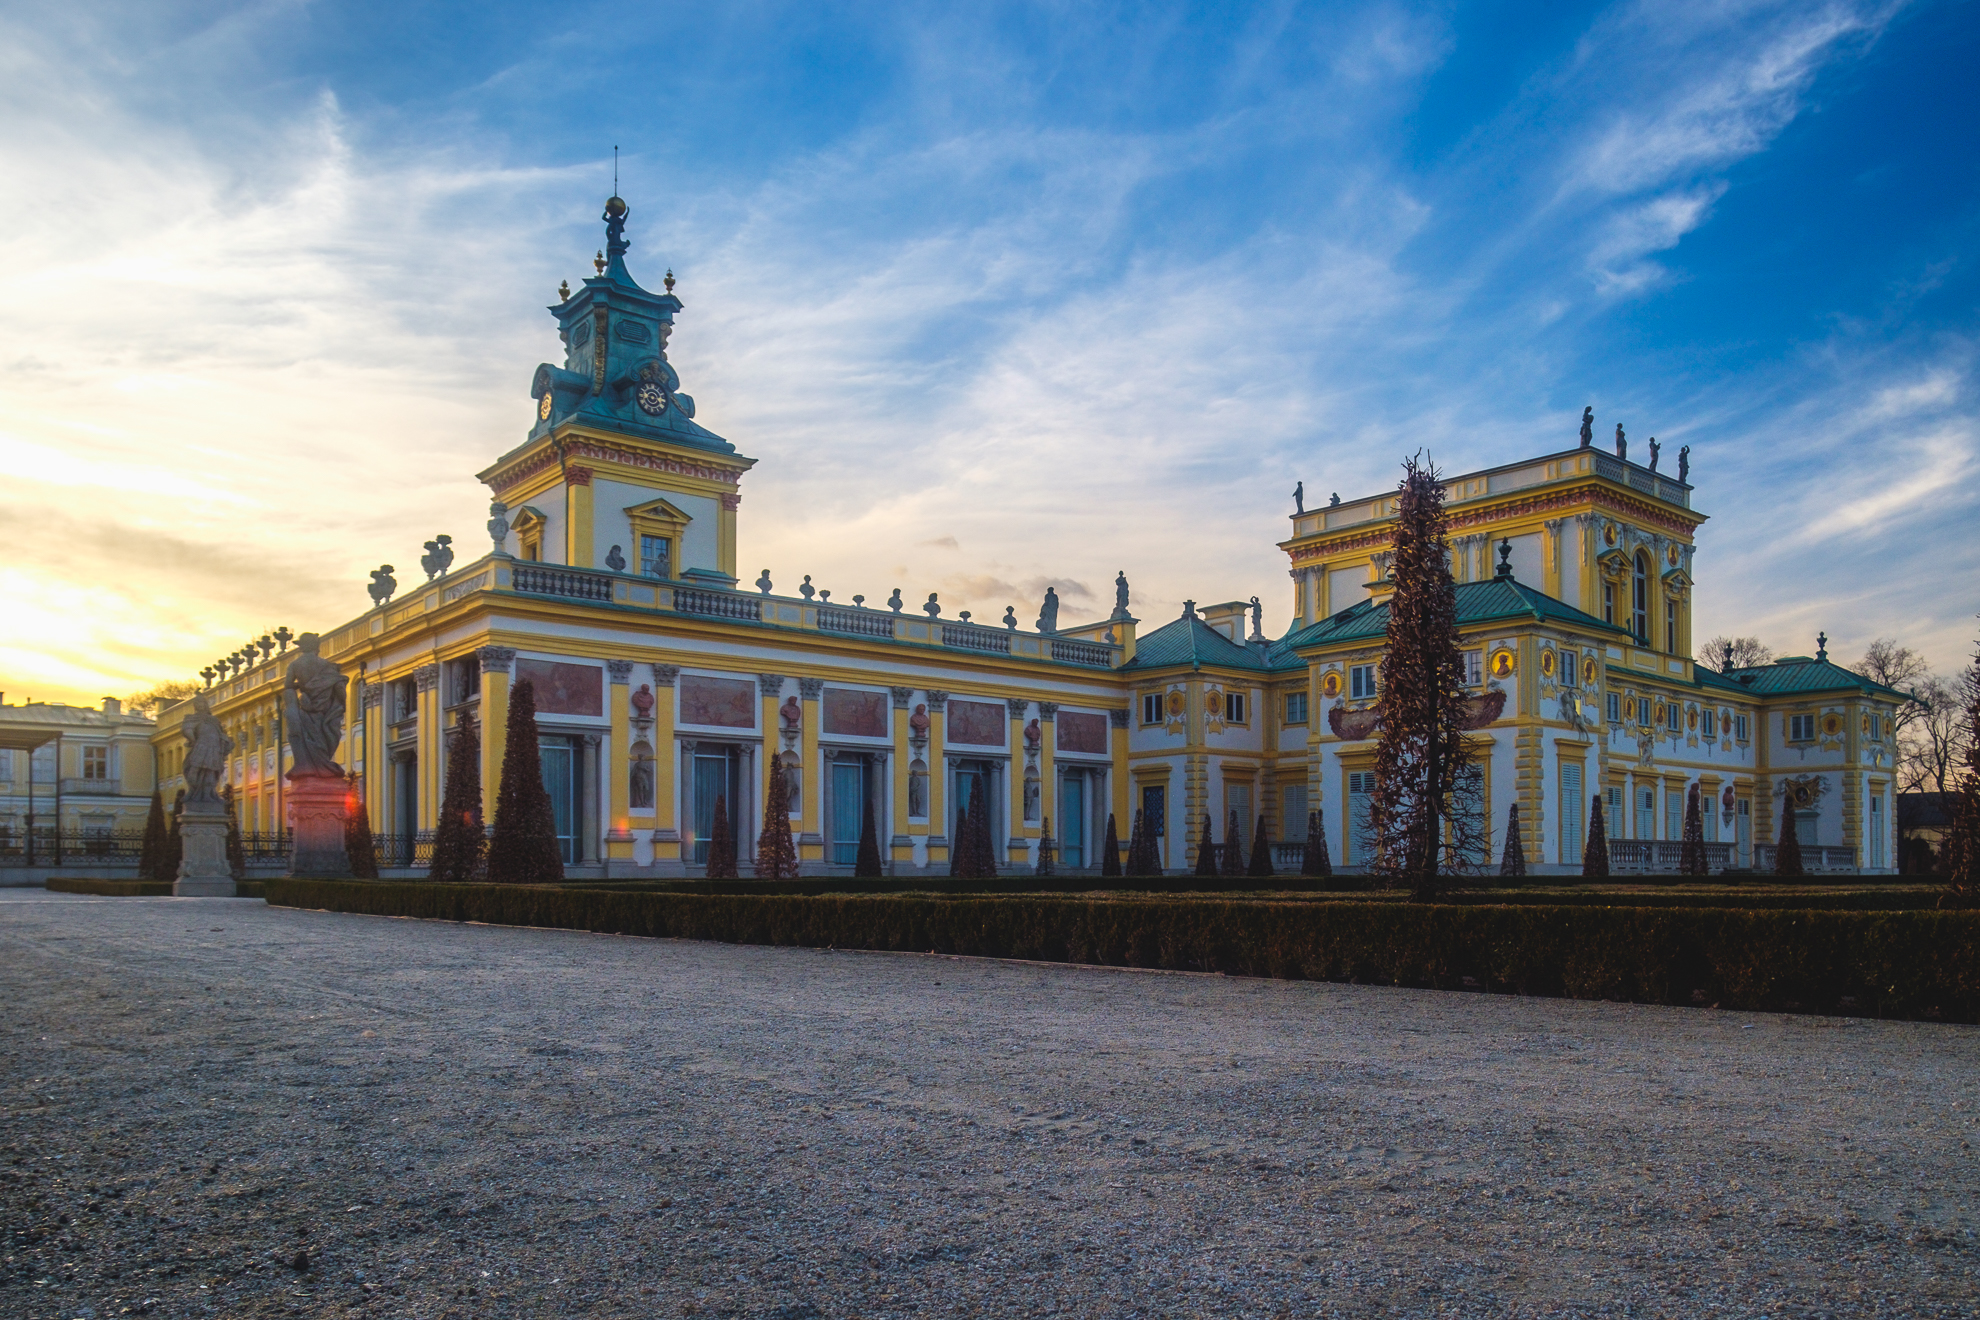 Censtachovos vienuolynas - Velickos drusku kasyklos - Krokuva – Vilanovo rumai - pazintine kelione i Lenkija